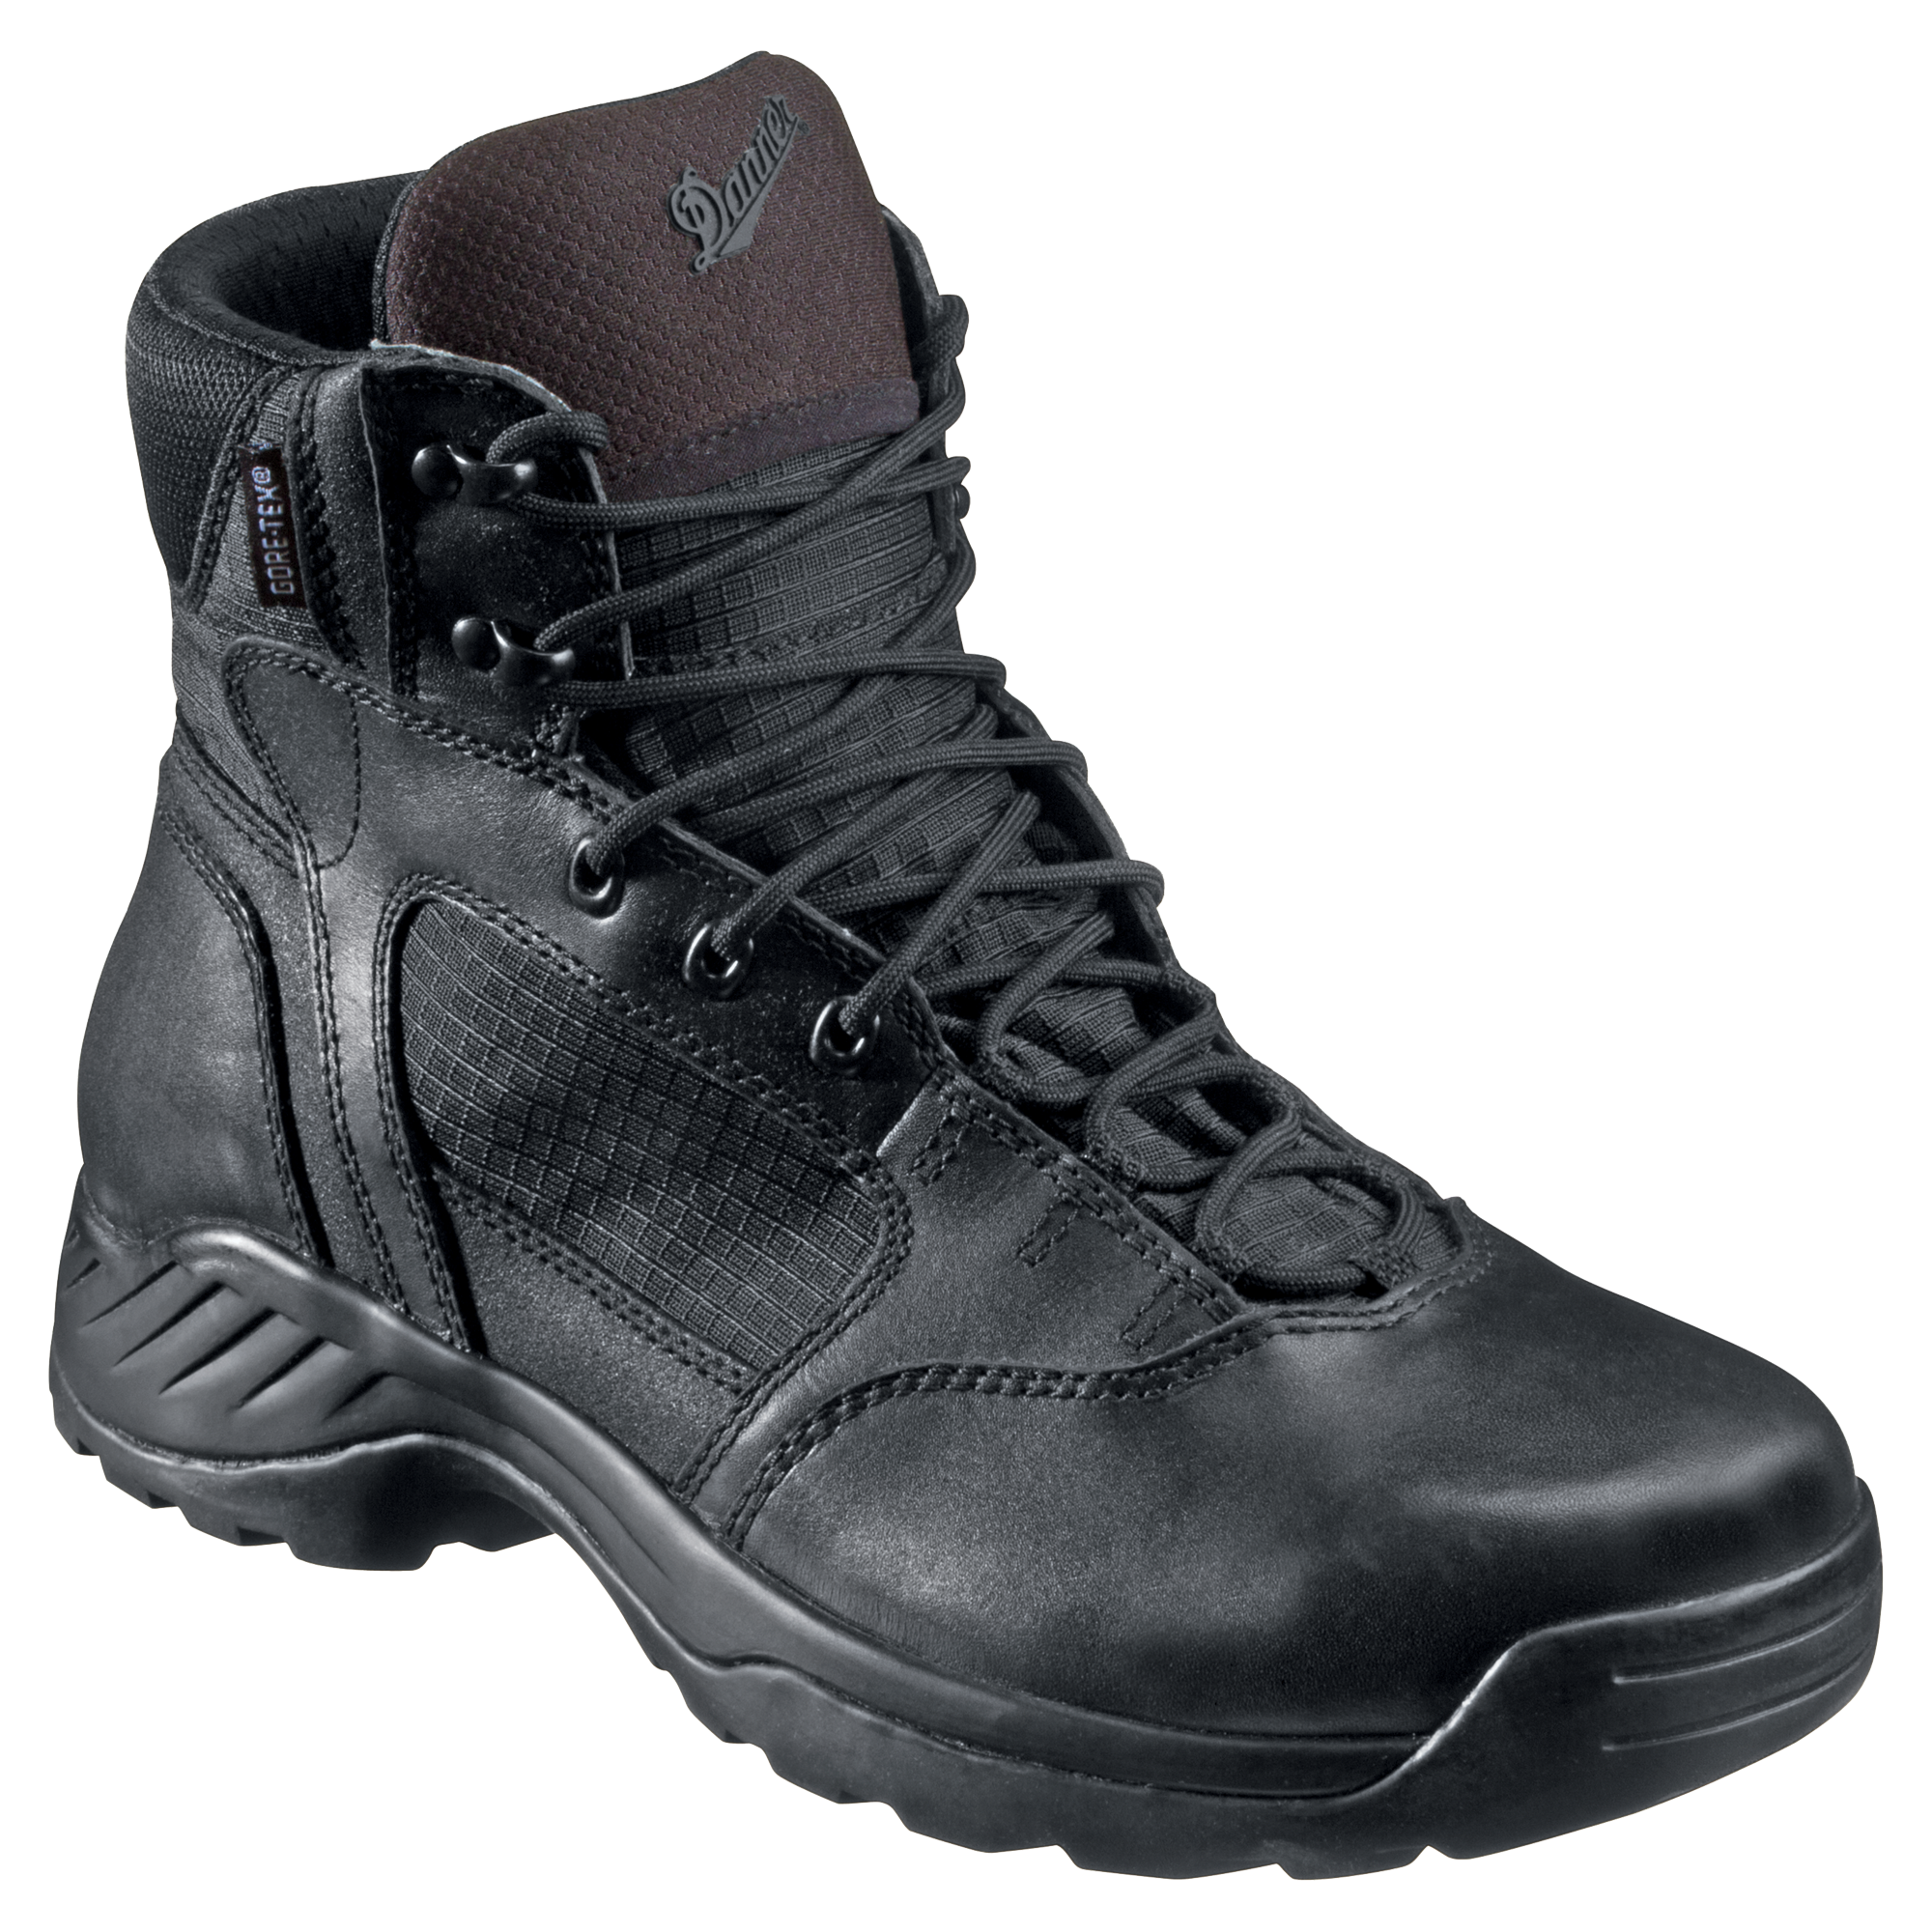 Danner Kinetic GTX 6'' Side-Zip Waterproof Tactical Duty Boots for Men - Black - 16W